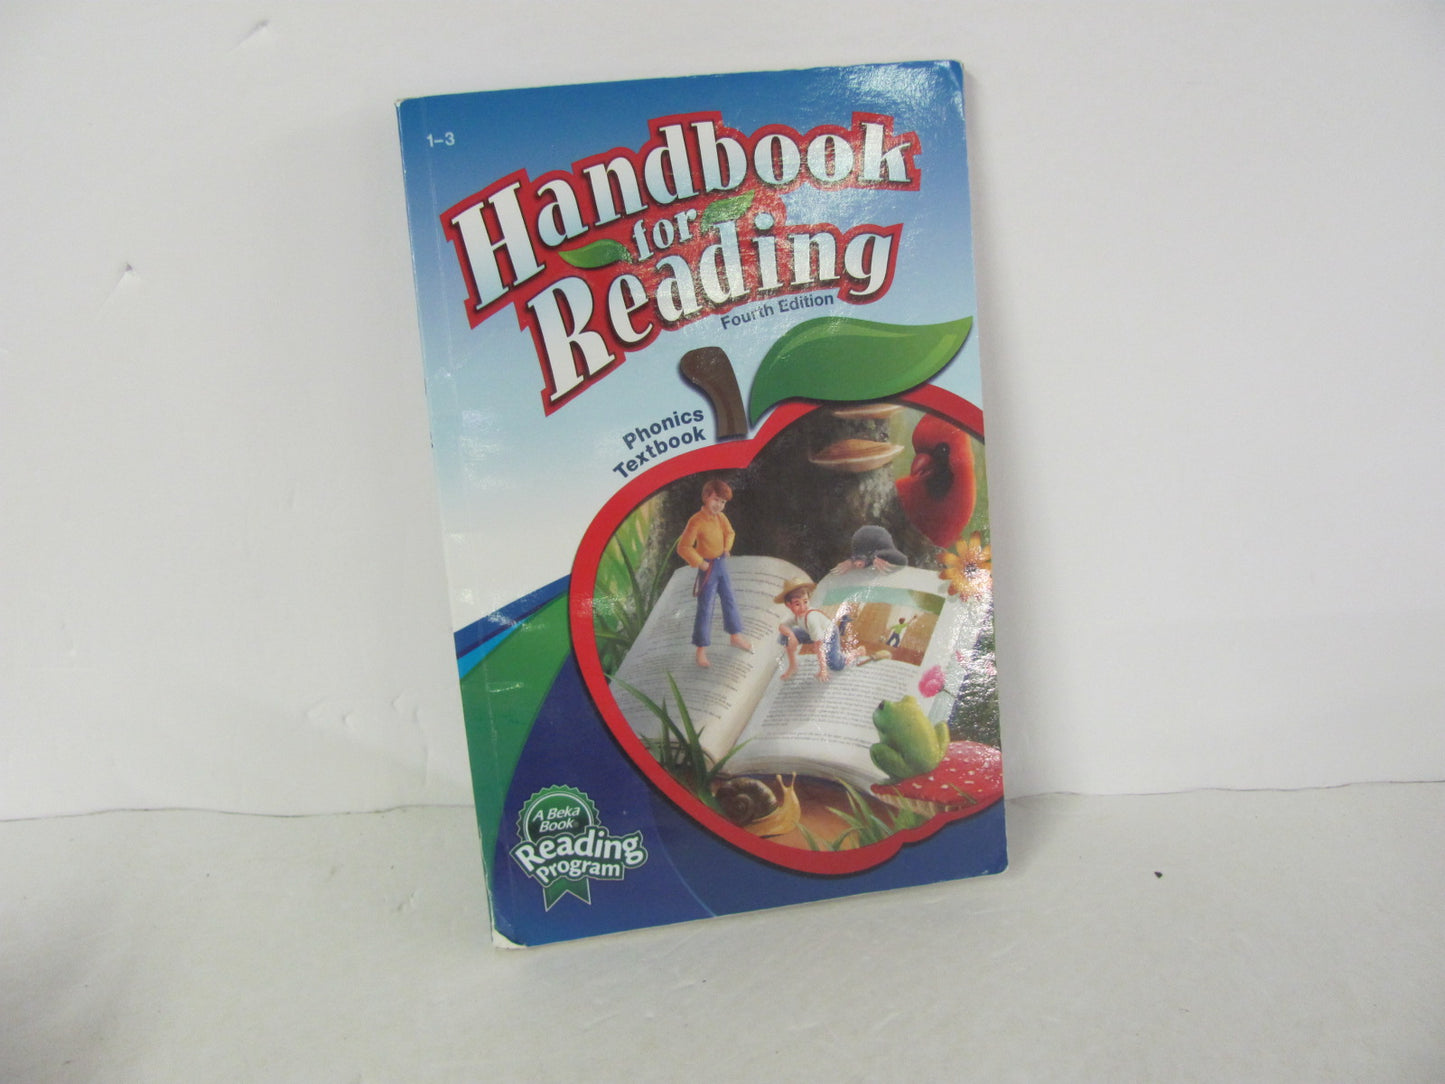 Handbook for Reading Abeka Pre-Owned Elementary Reading Textbooks